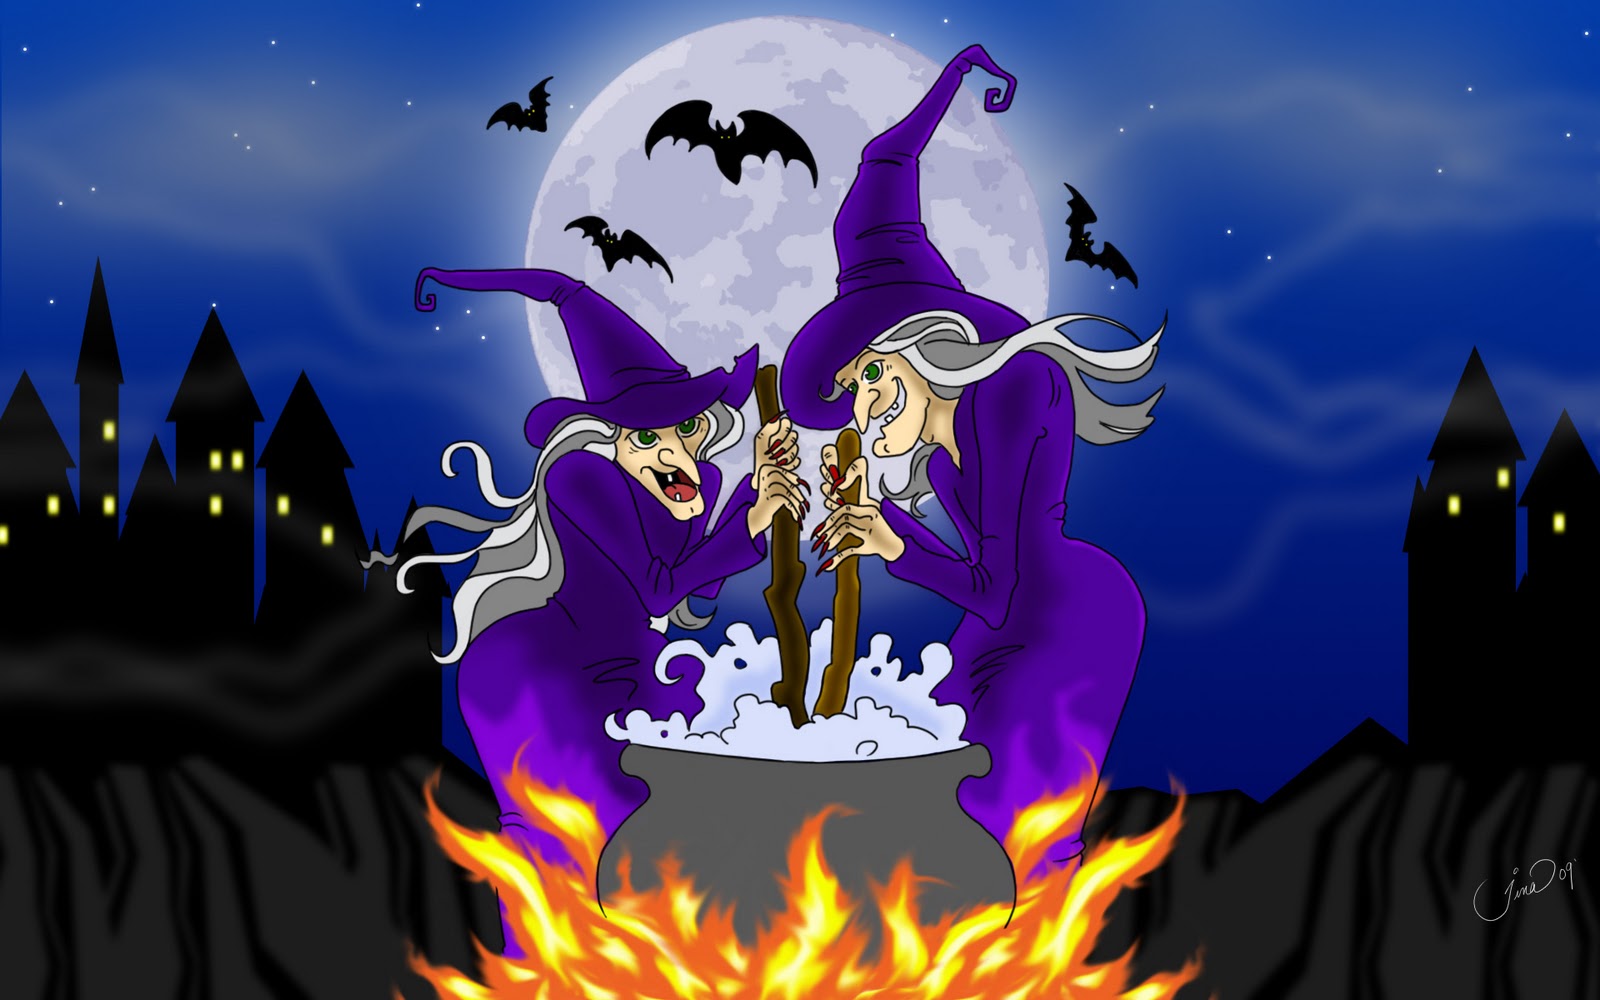 Stunning Cartoon Halloween Wallpaper Image For